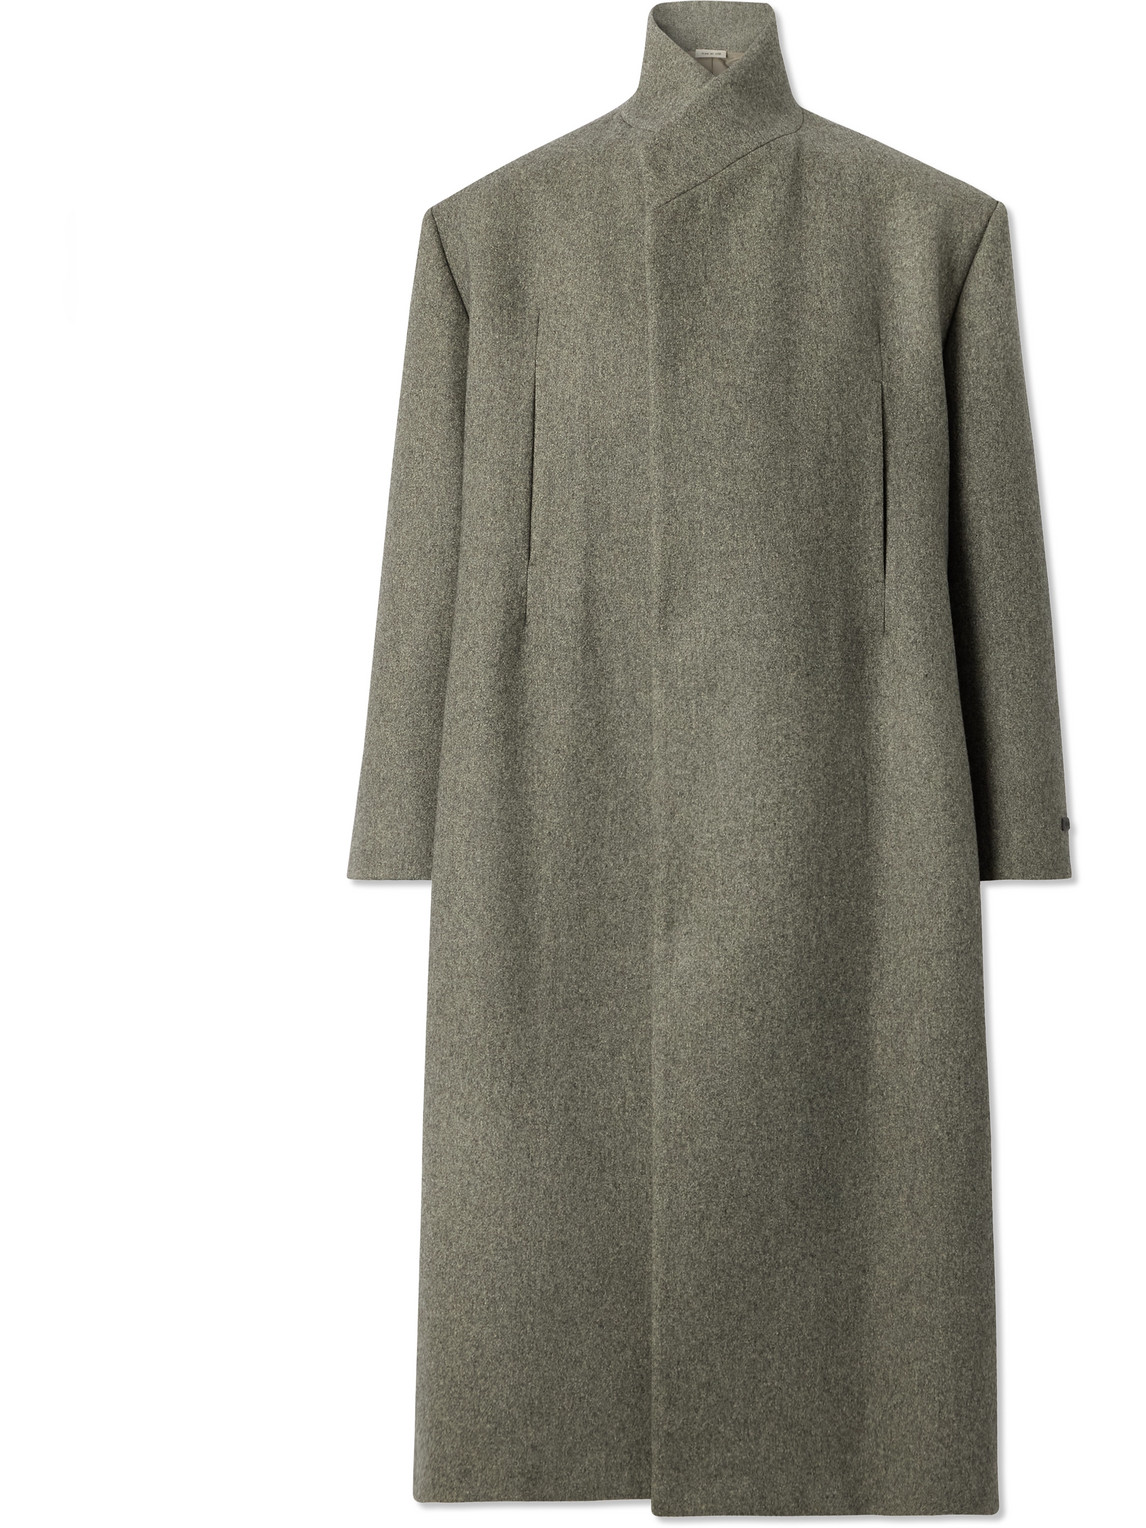 Virgin Wool and Cotton-Blend Overcoat